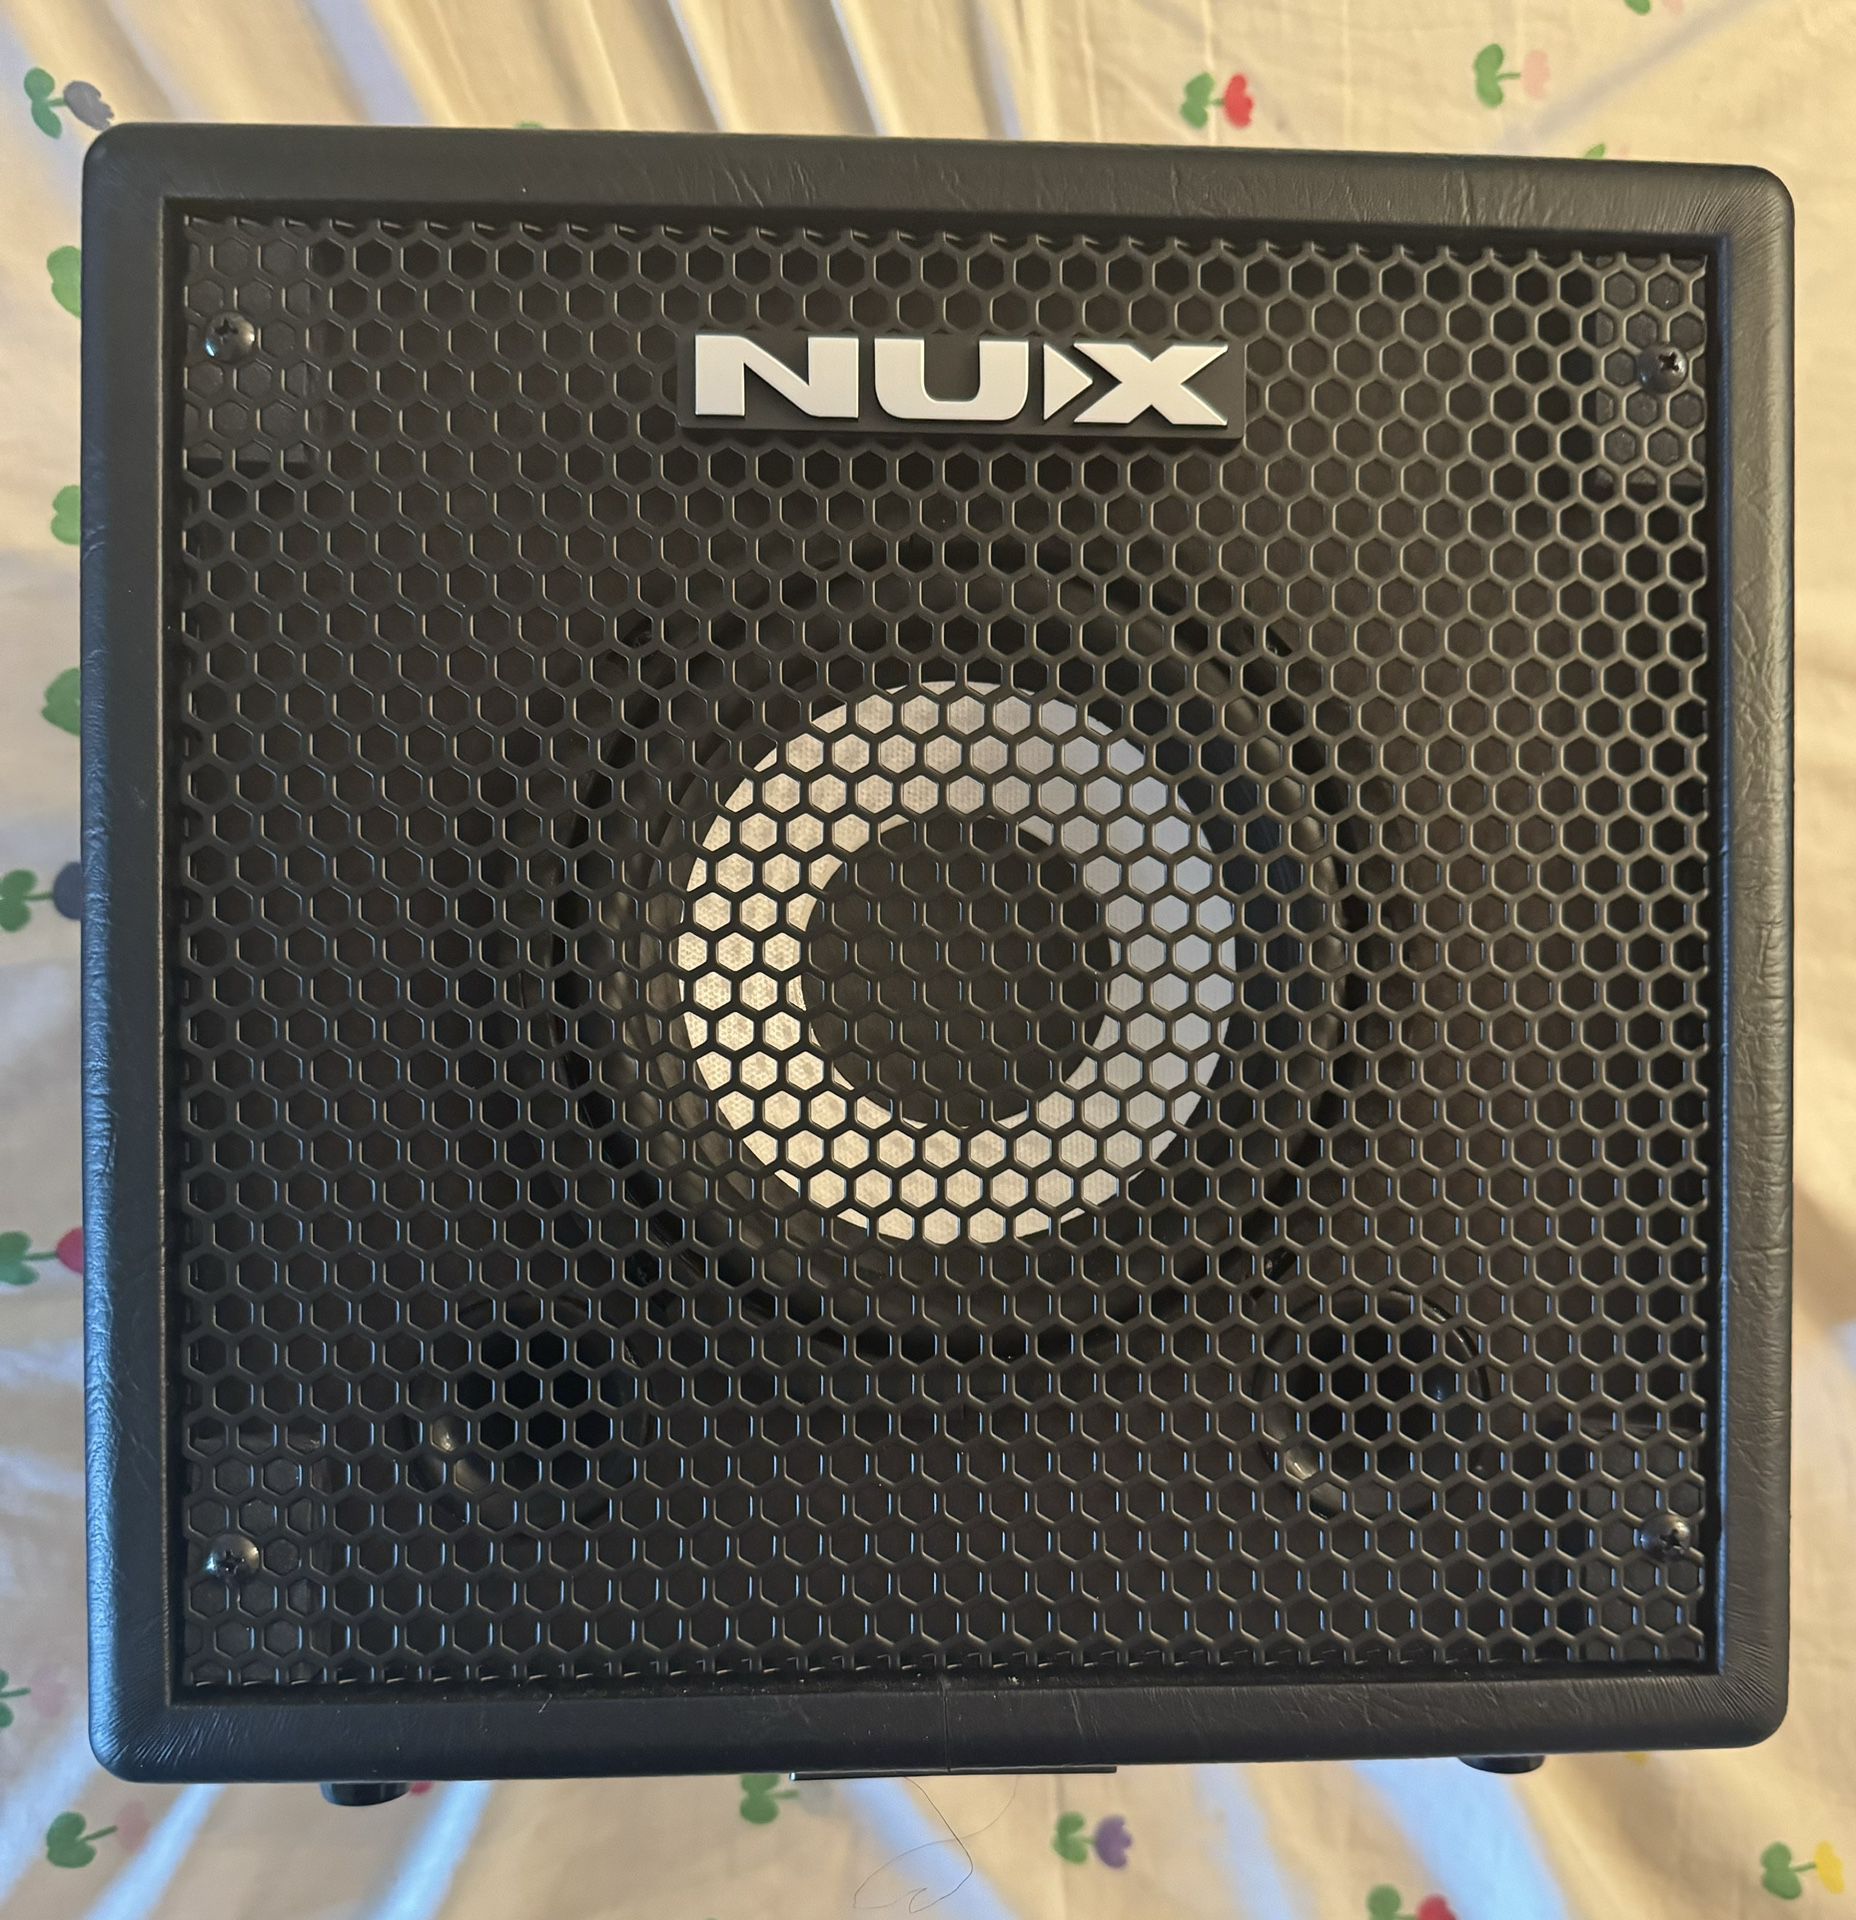 New NuX Mighty Bass 50BT 50-watt modeling Digital Bass Amplifier with Bluetooth   $150. (289.99 amazon)